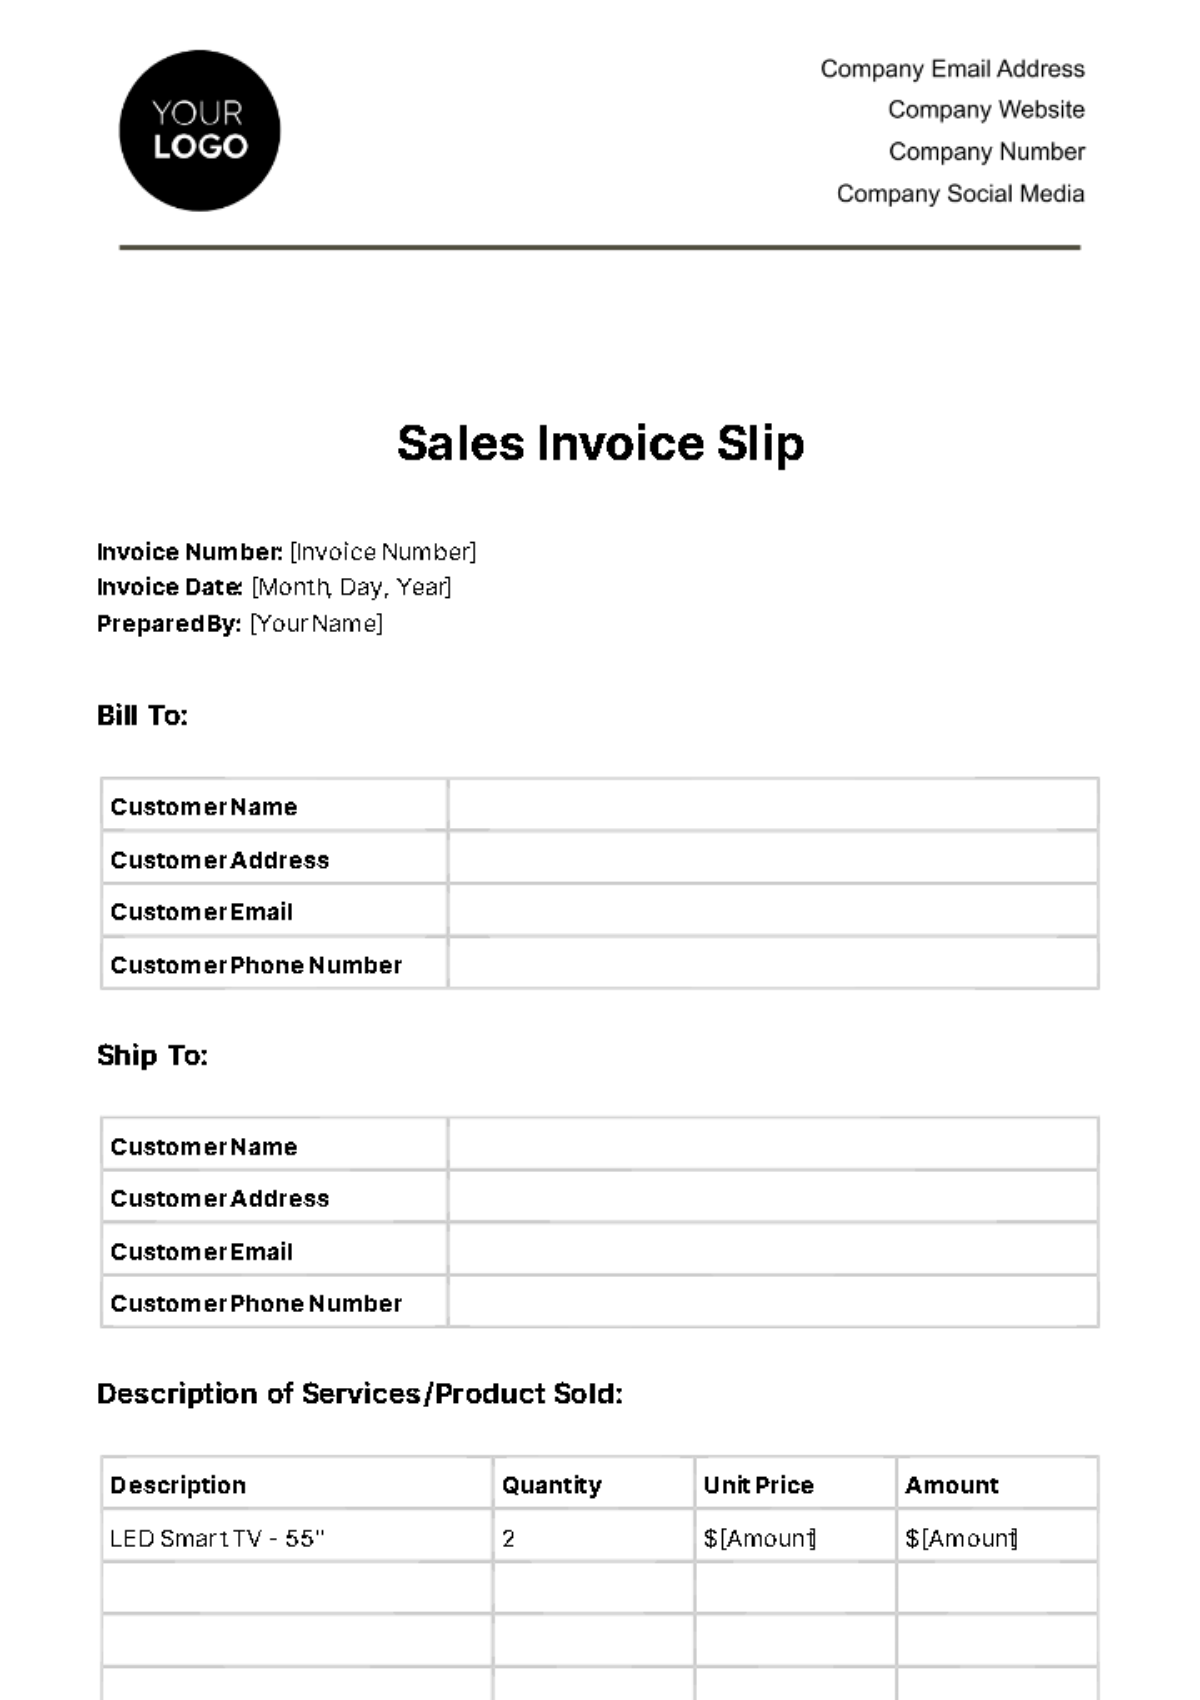 Free Sales Invoice Slip Template